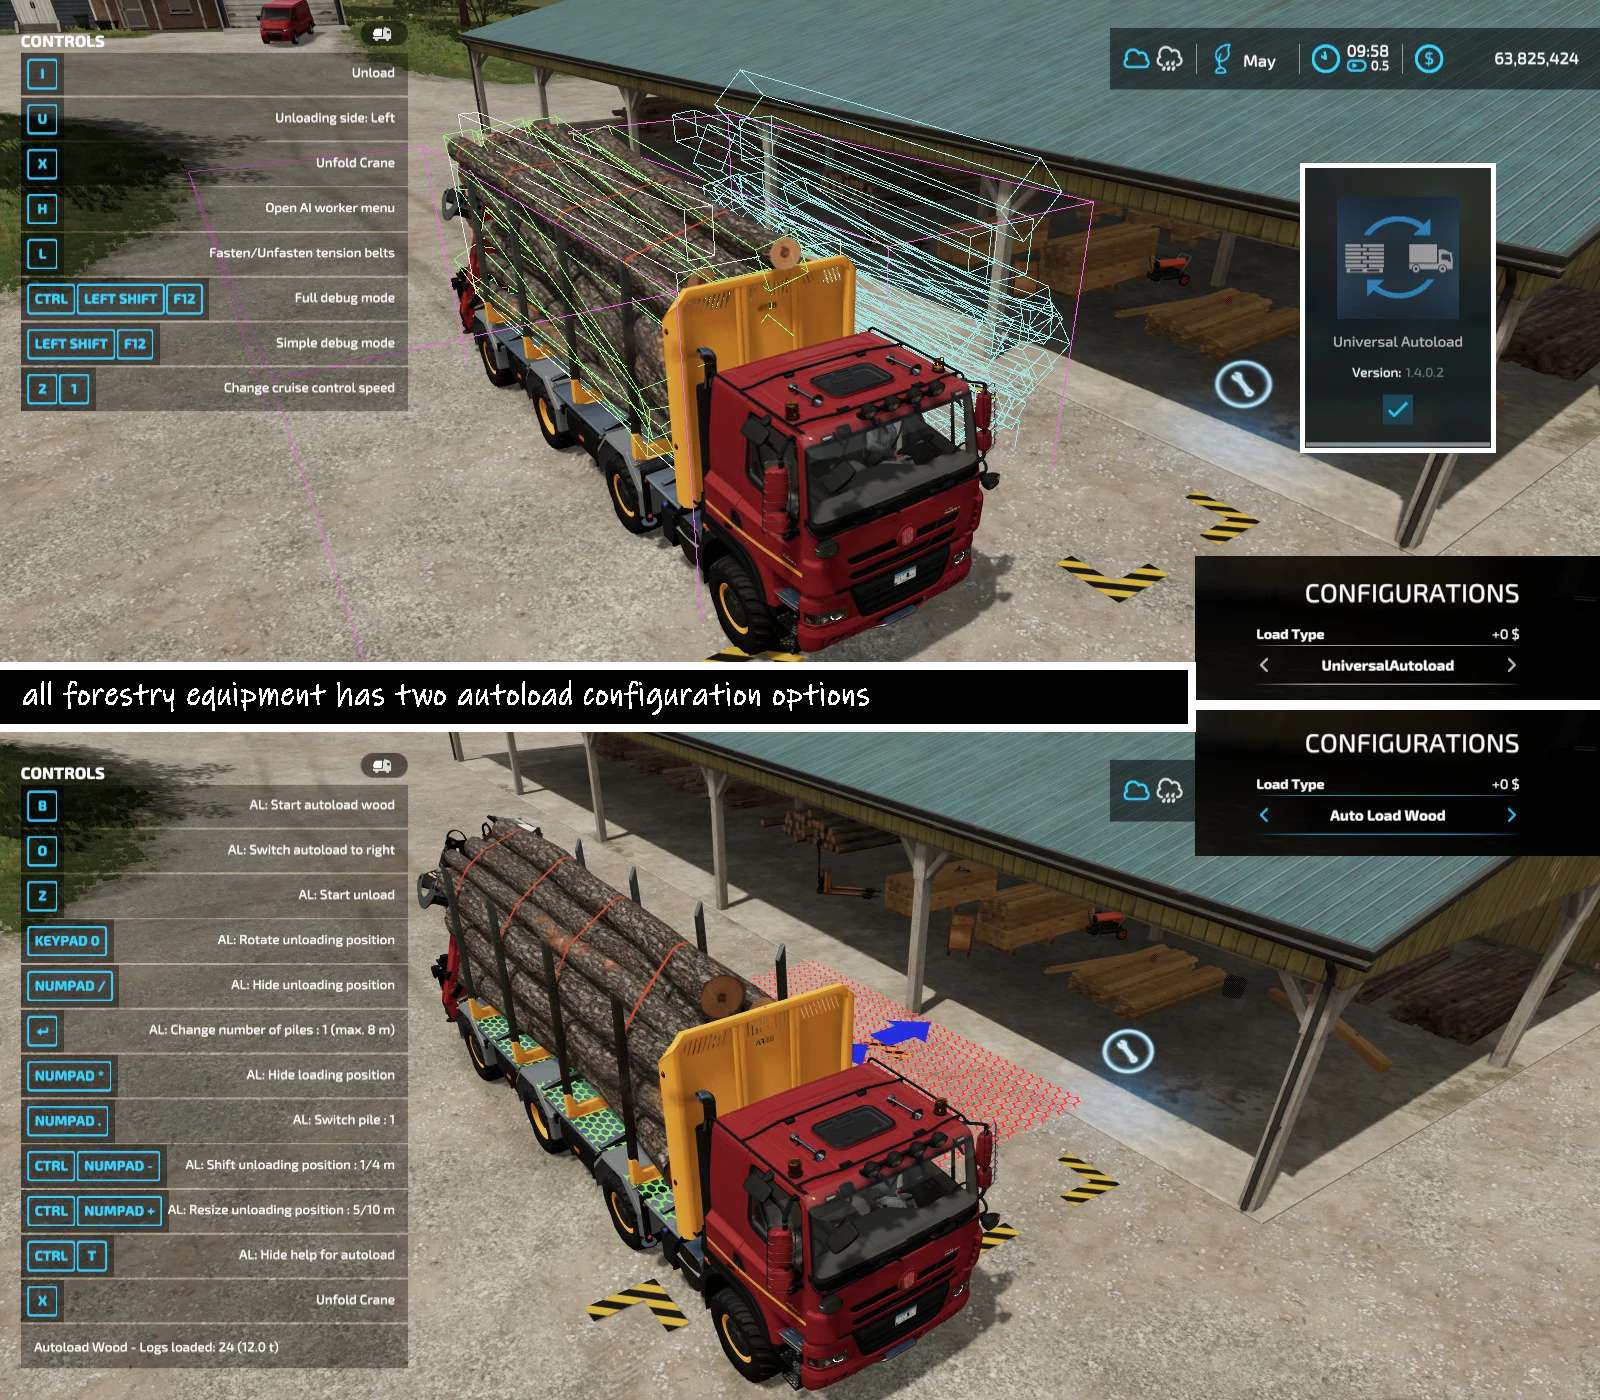 FS22: Sisu Polar Cassette v 1.0.0.0 Trucks Mod für Farming Simulator 22